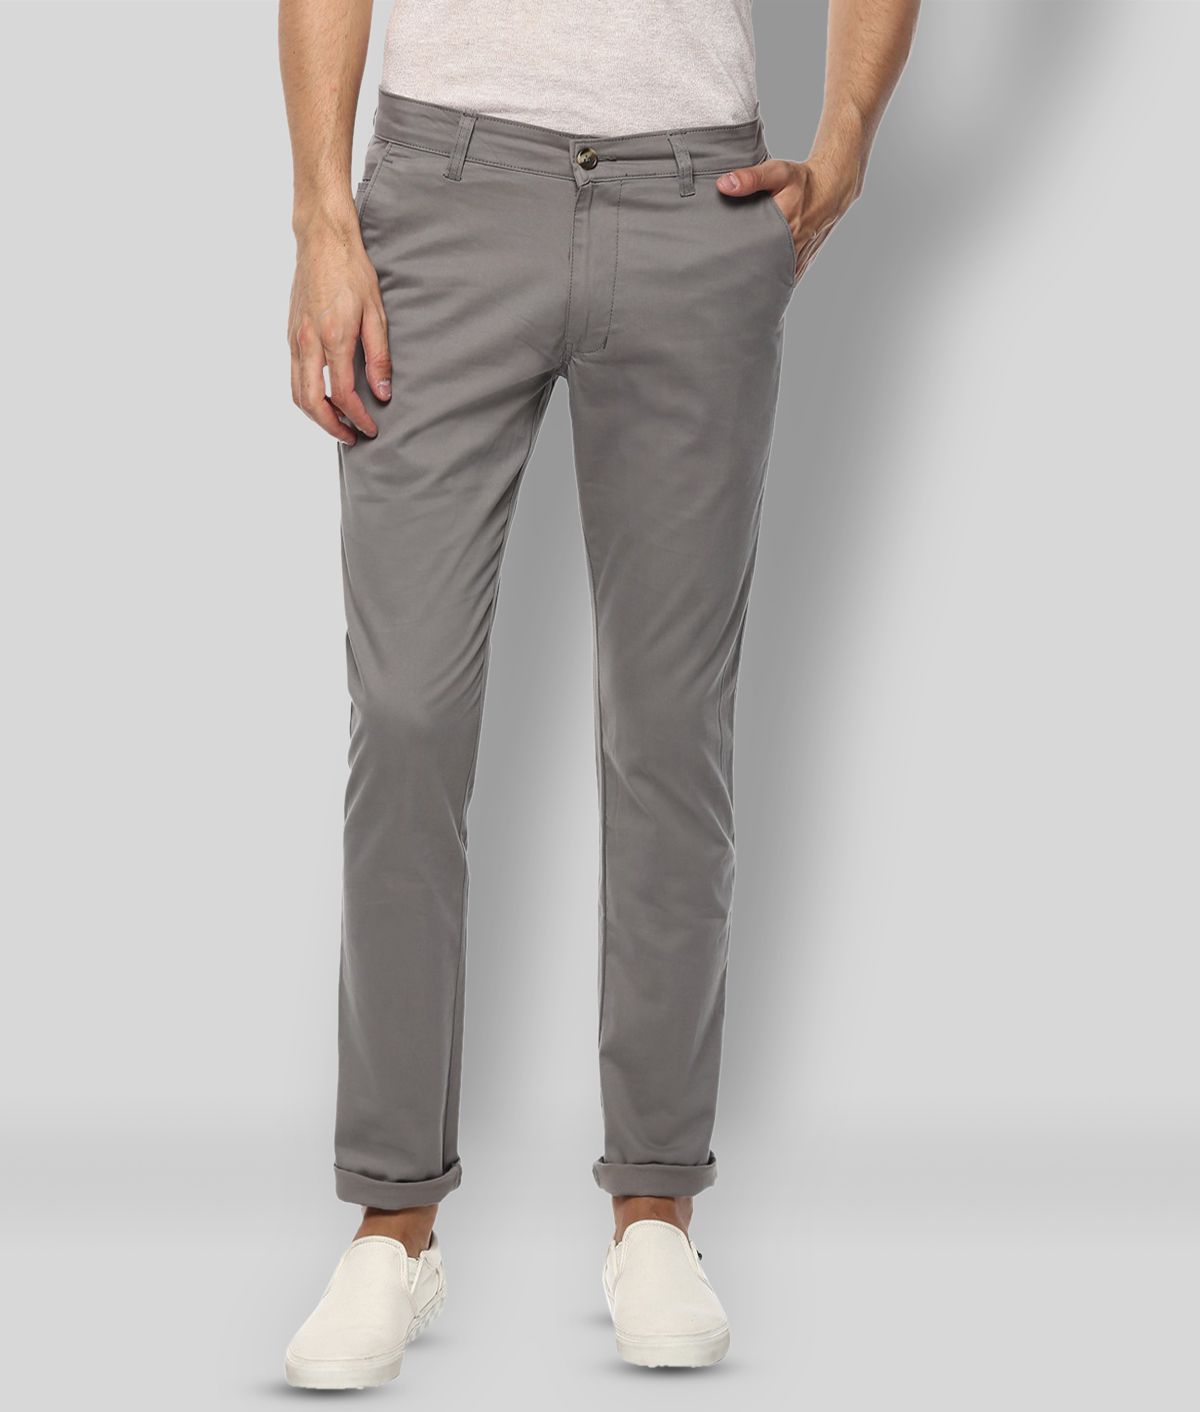     			Urbano Fashion - Grey Cotton Slim Fit Men's Chinos (Pack of 1)